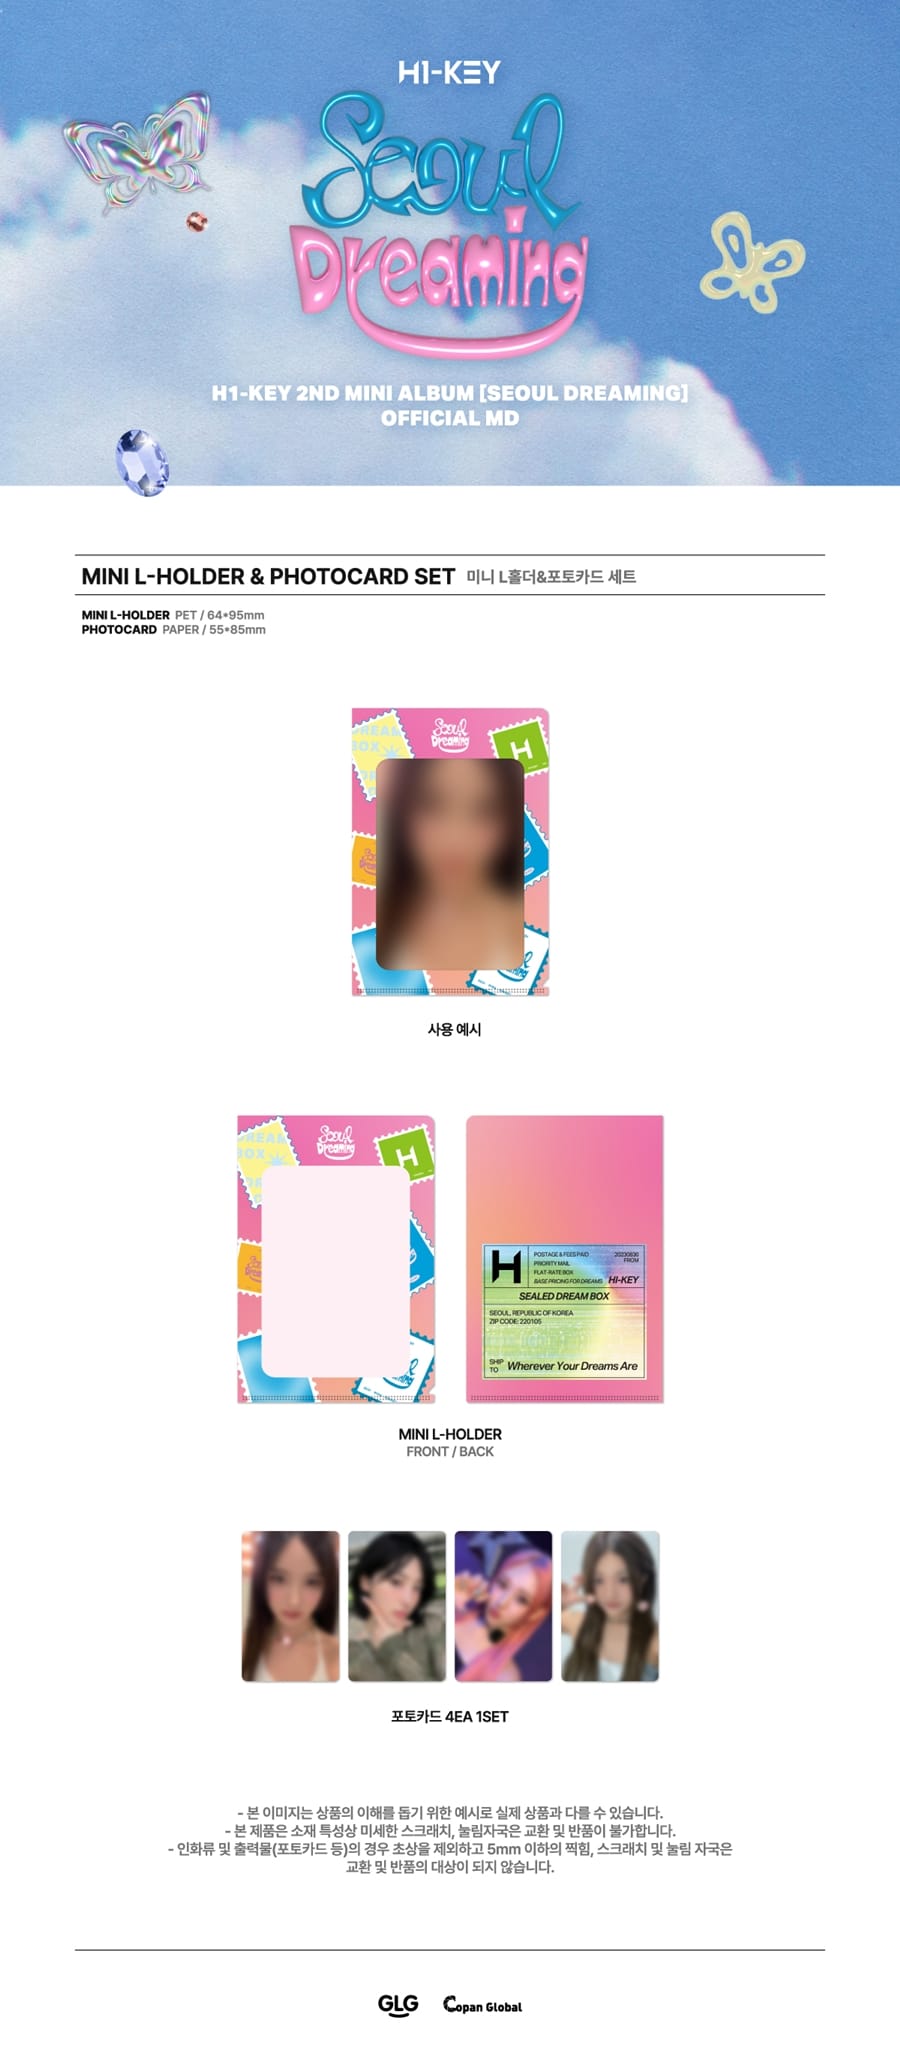 h1-key-06-mini-l-holder-and-photocard-set-seoul-dreaming-md-wholesales